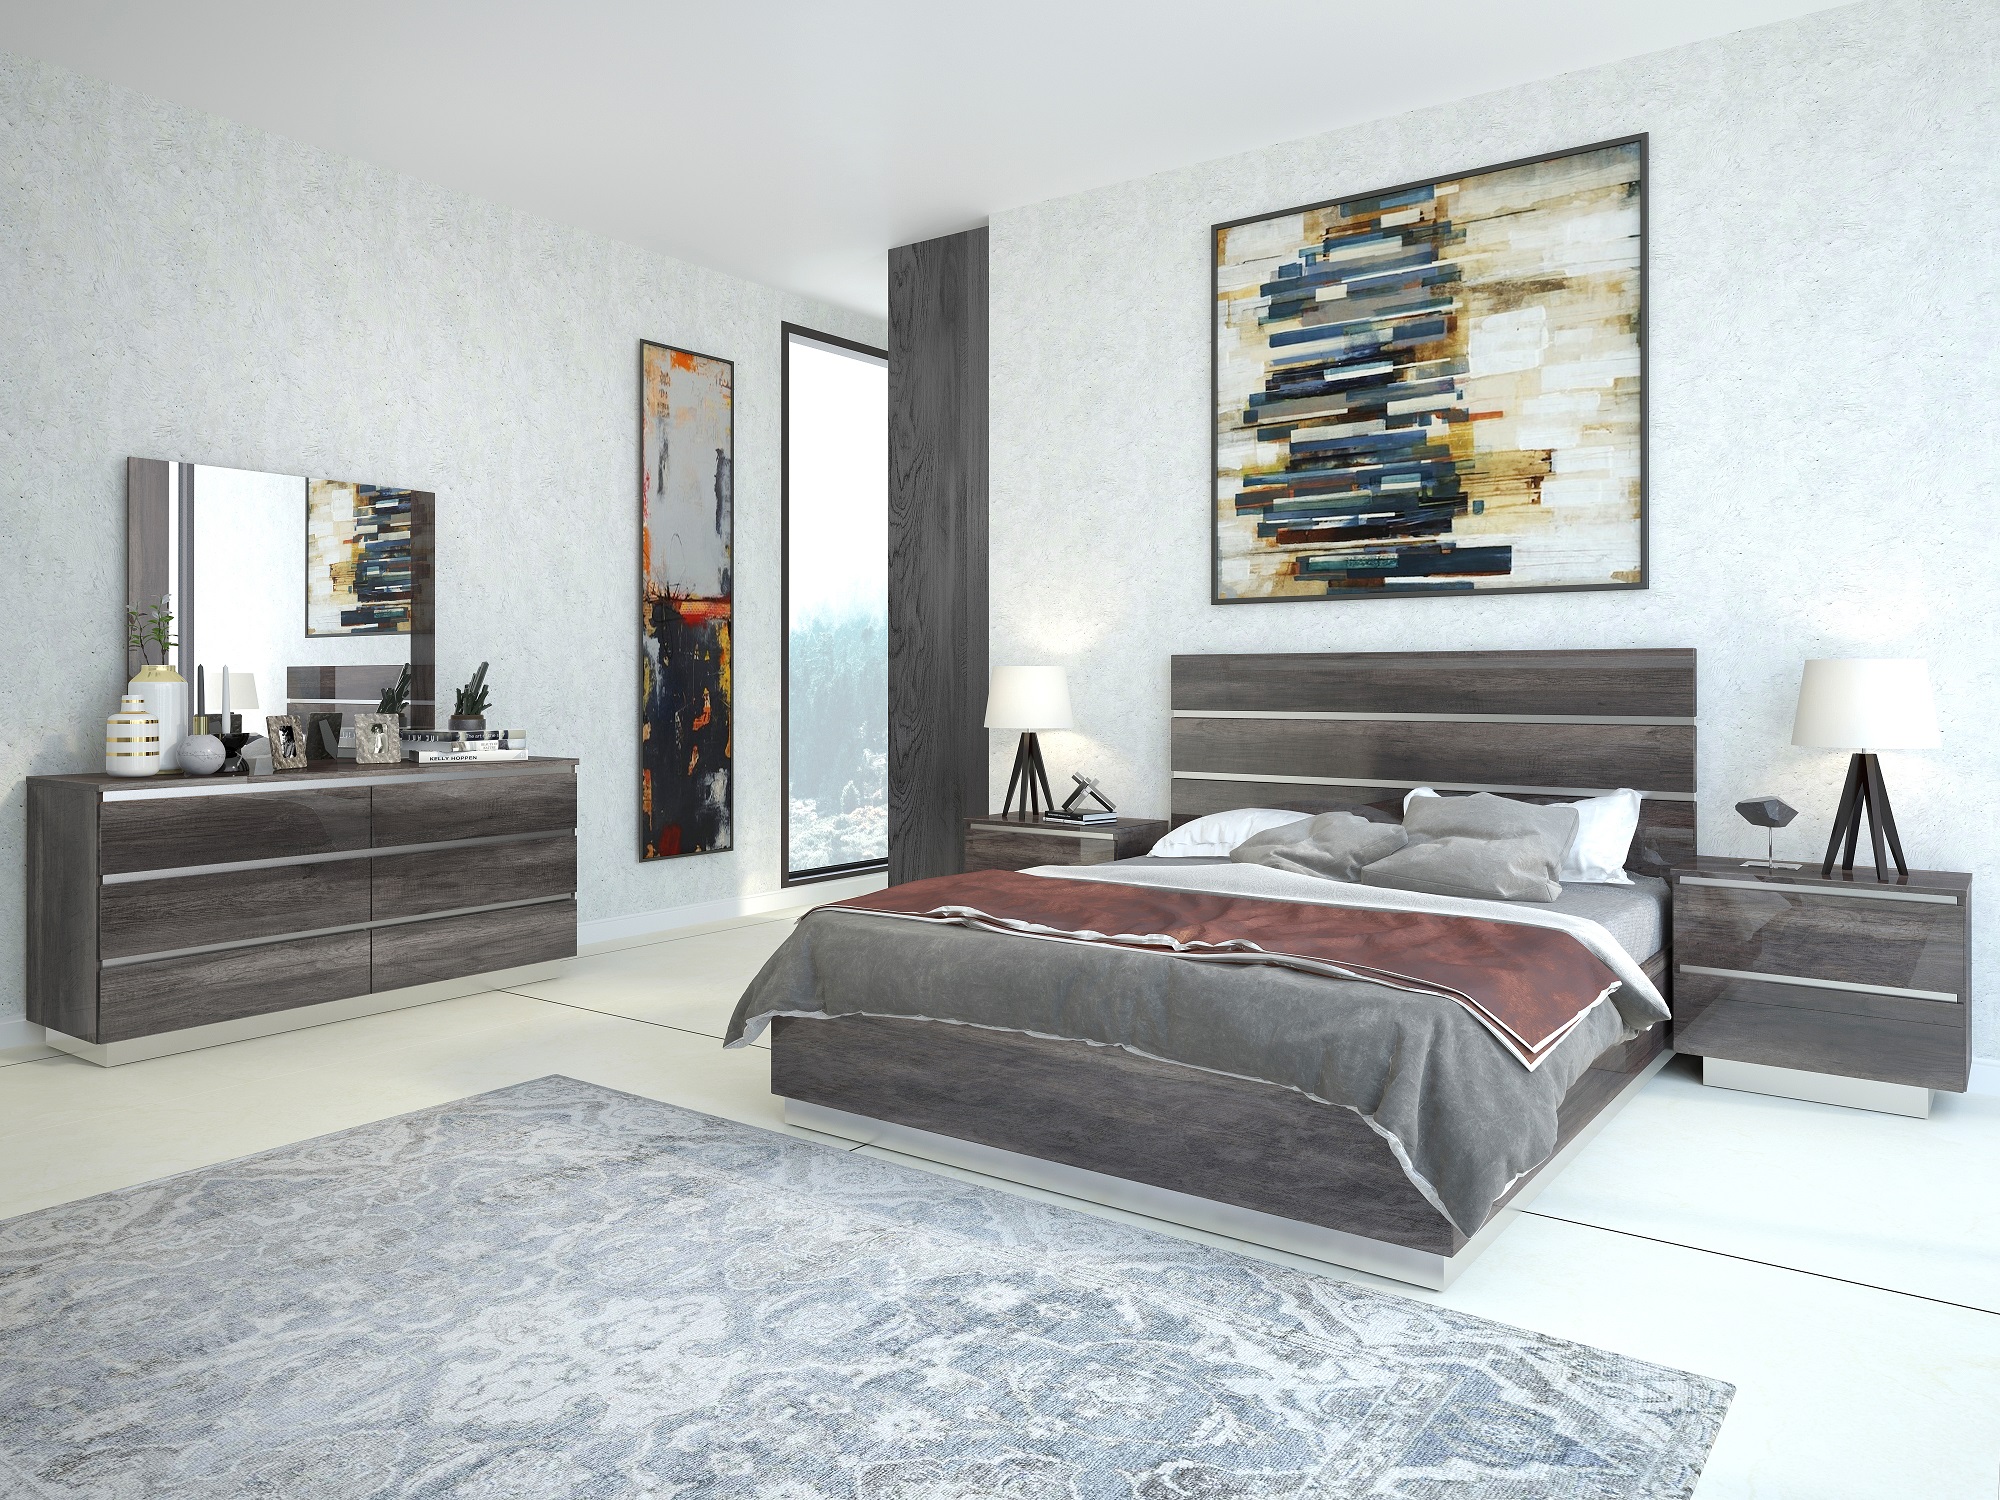 Stylish Quality Luxury Modern Furniture Set with Extra Storage Case Colorado Springs Colorado J